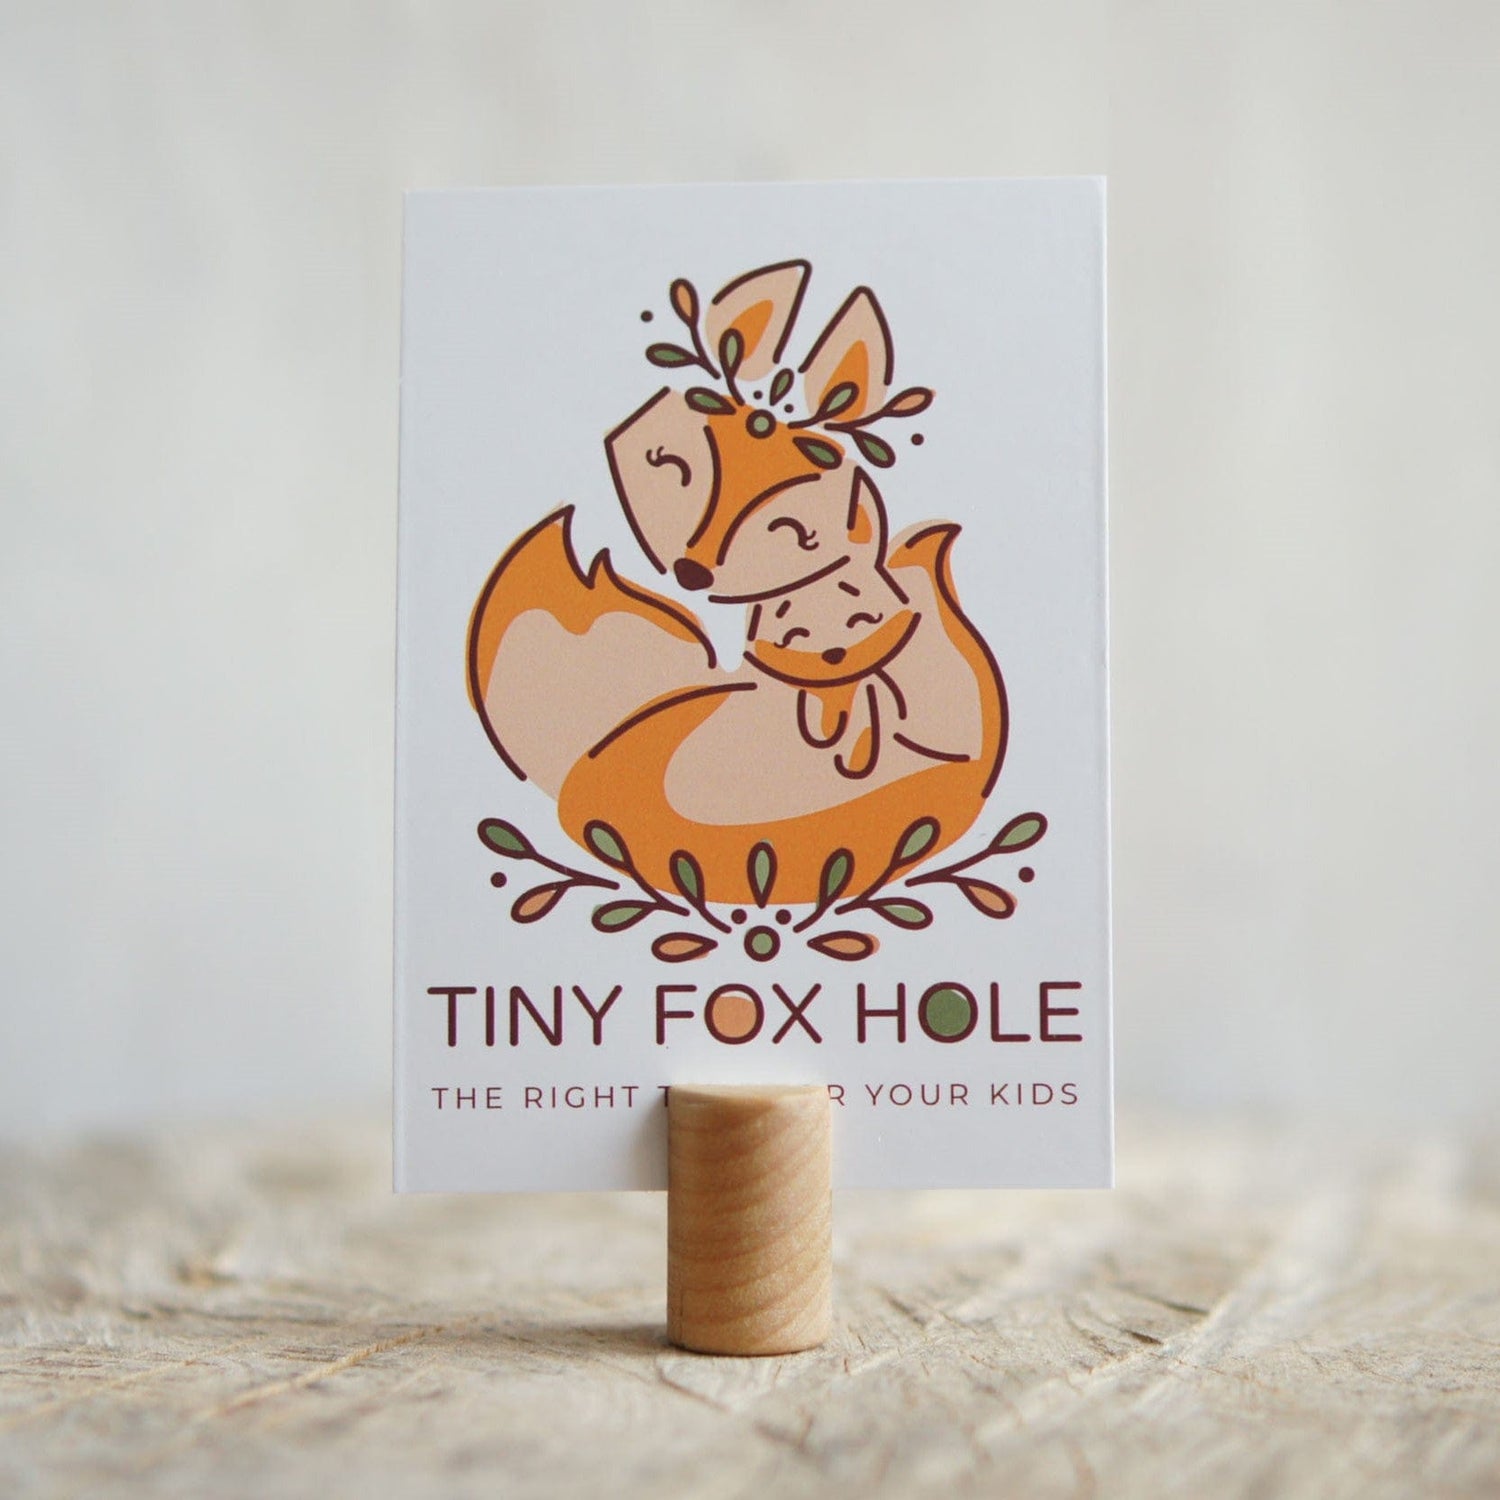 Tiny Fox Hole Celebration Rings Birthday/Celebration Ring Wooden Picture Holder